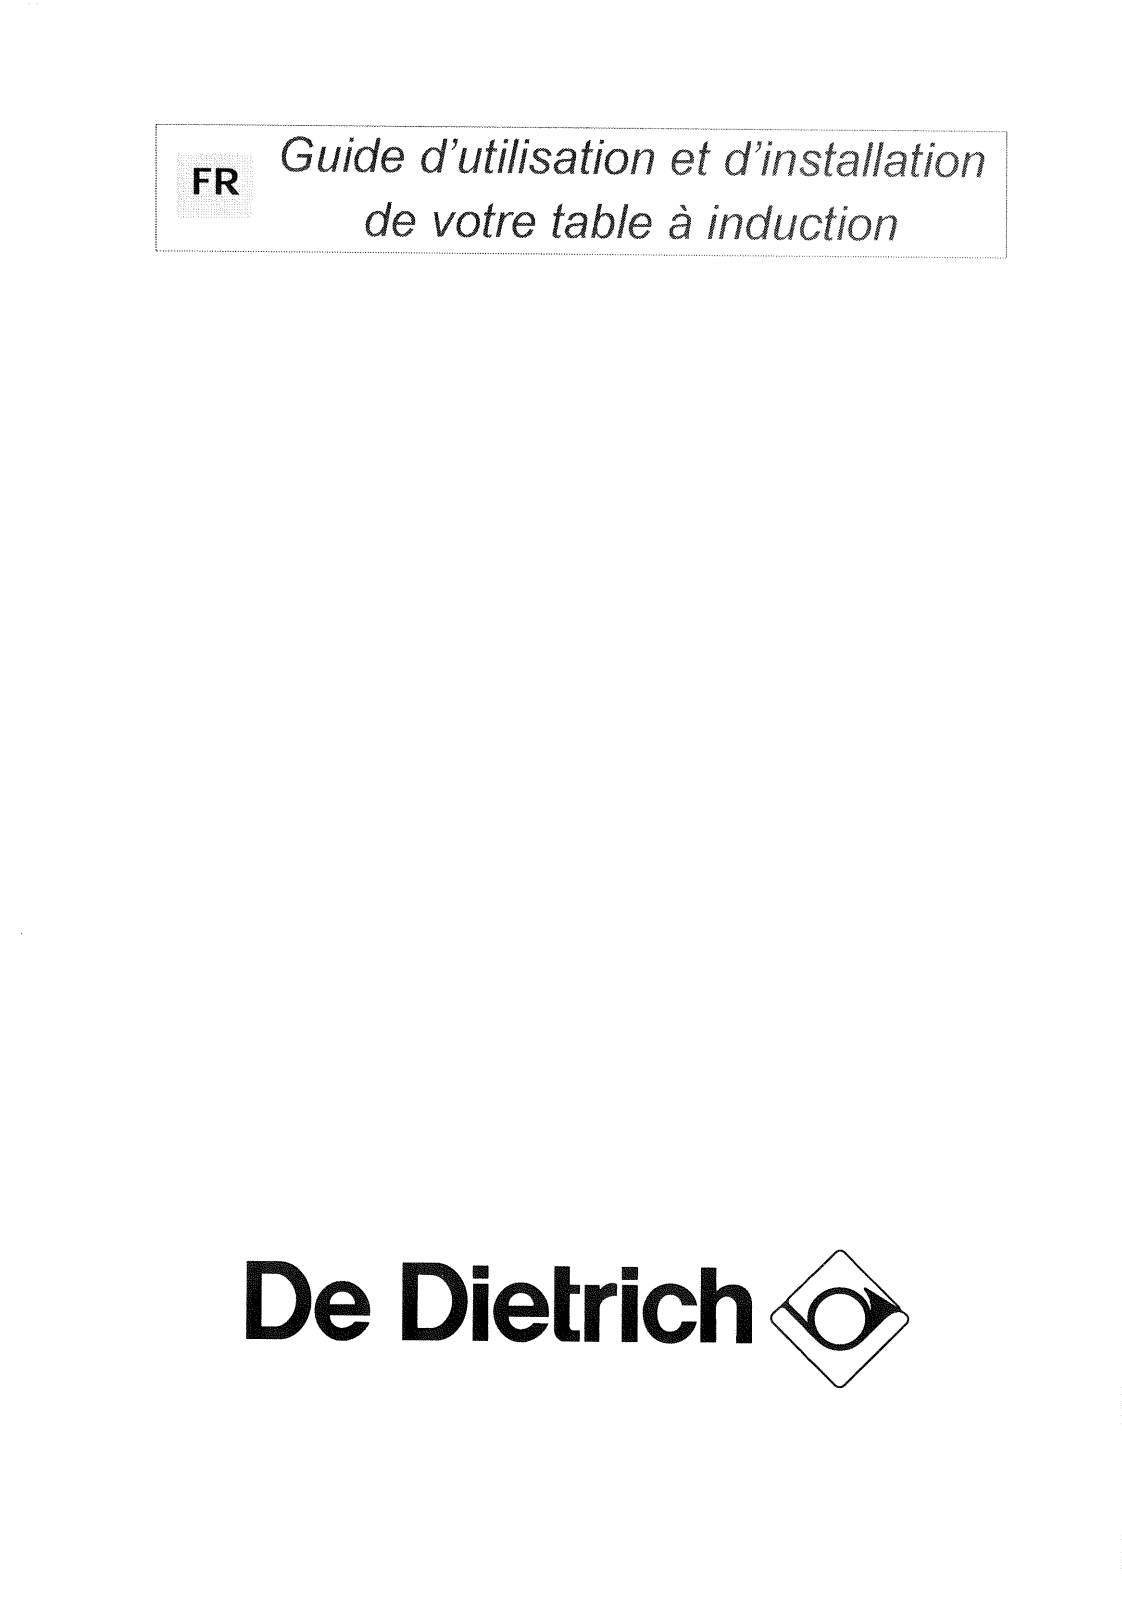 De dietrich DTI001BF1, DTI106XE1 User Manual